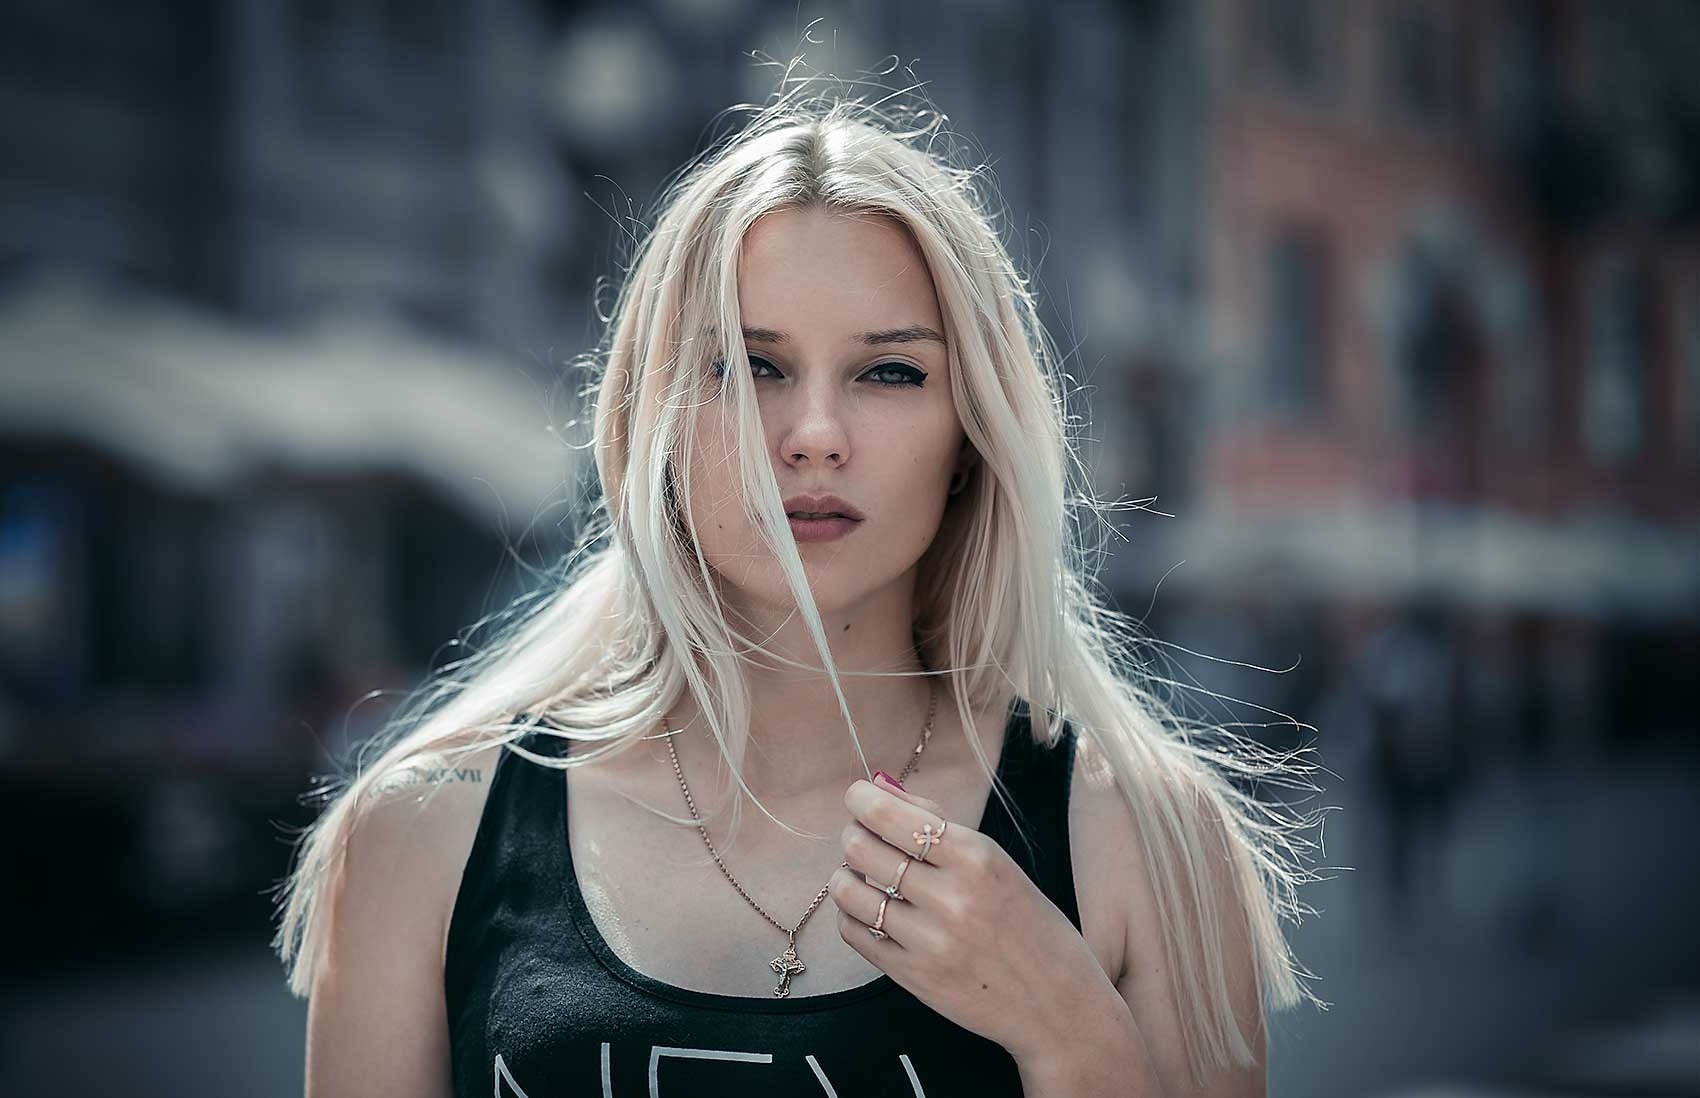 People 1700x1098 women model face portrait blonde urban women outdoors hair in face rings necklace